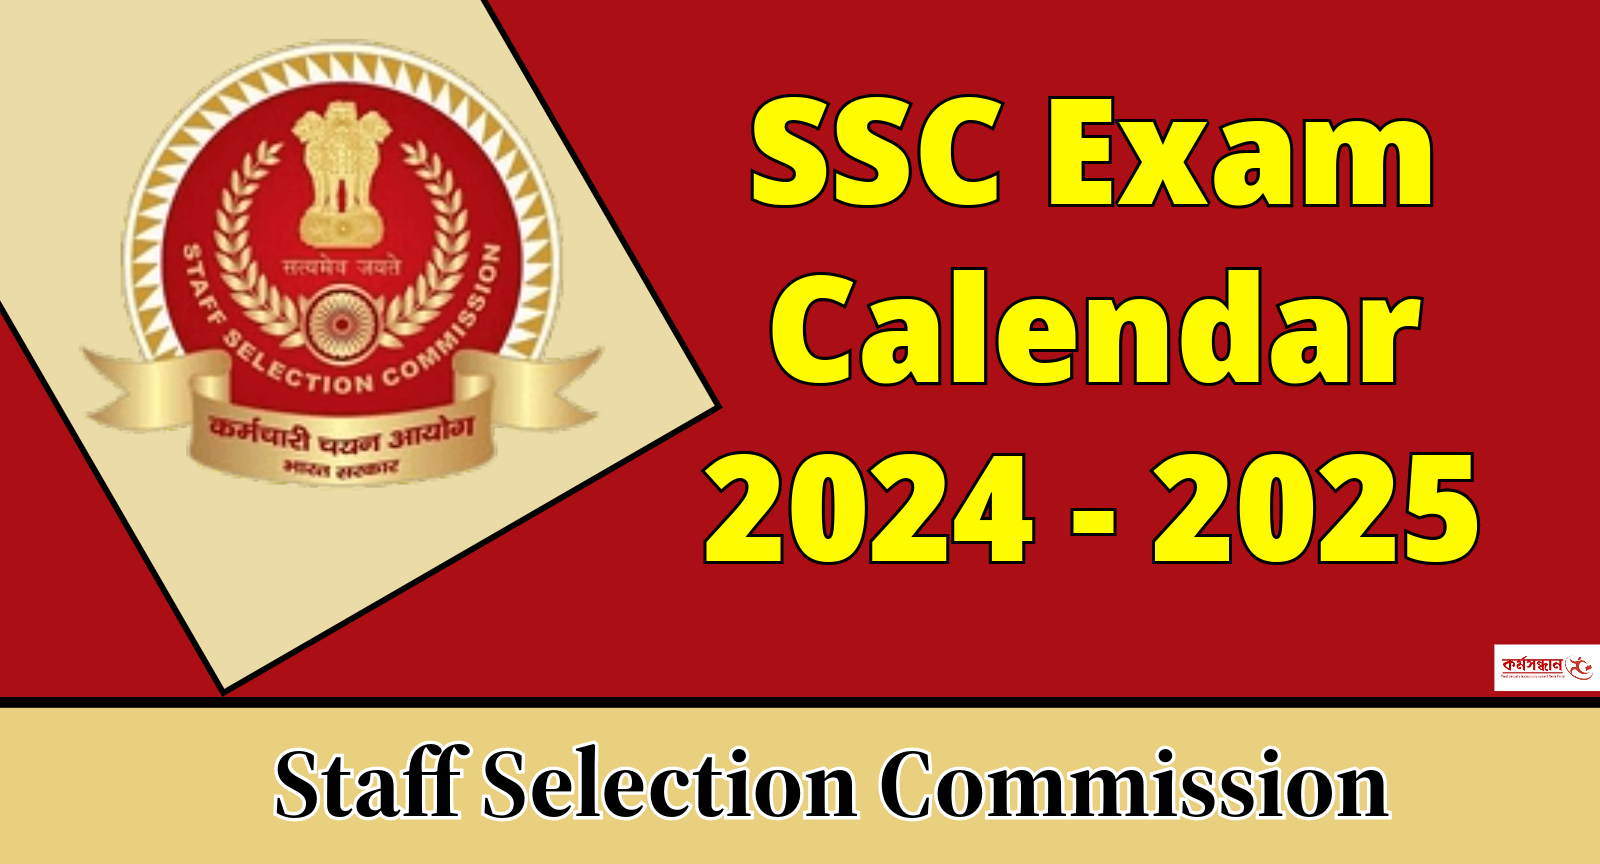 SSC Exam Calendar 2024-2025 Published: Check Details Now